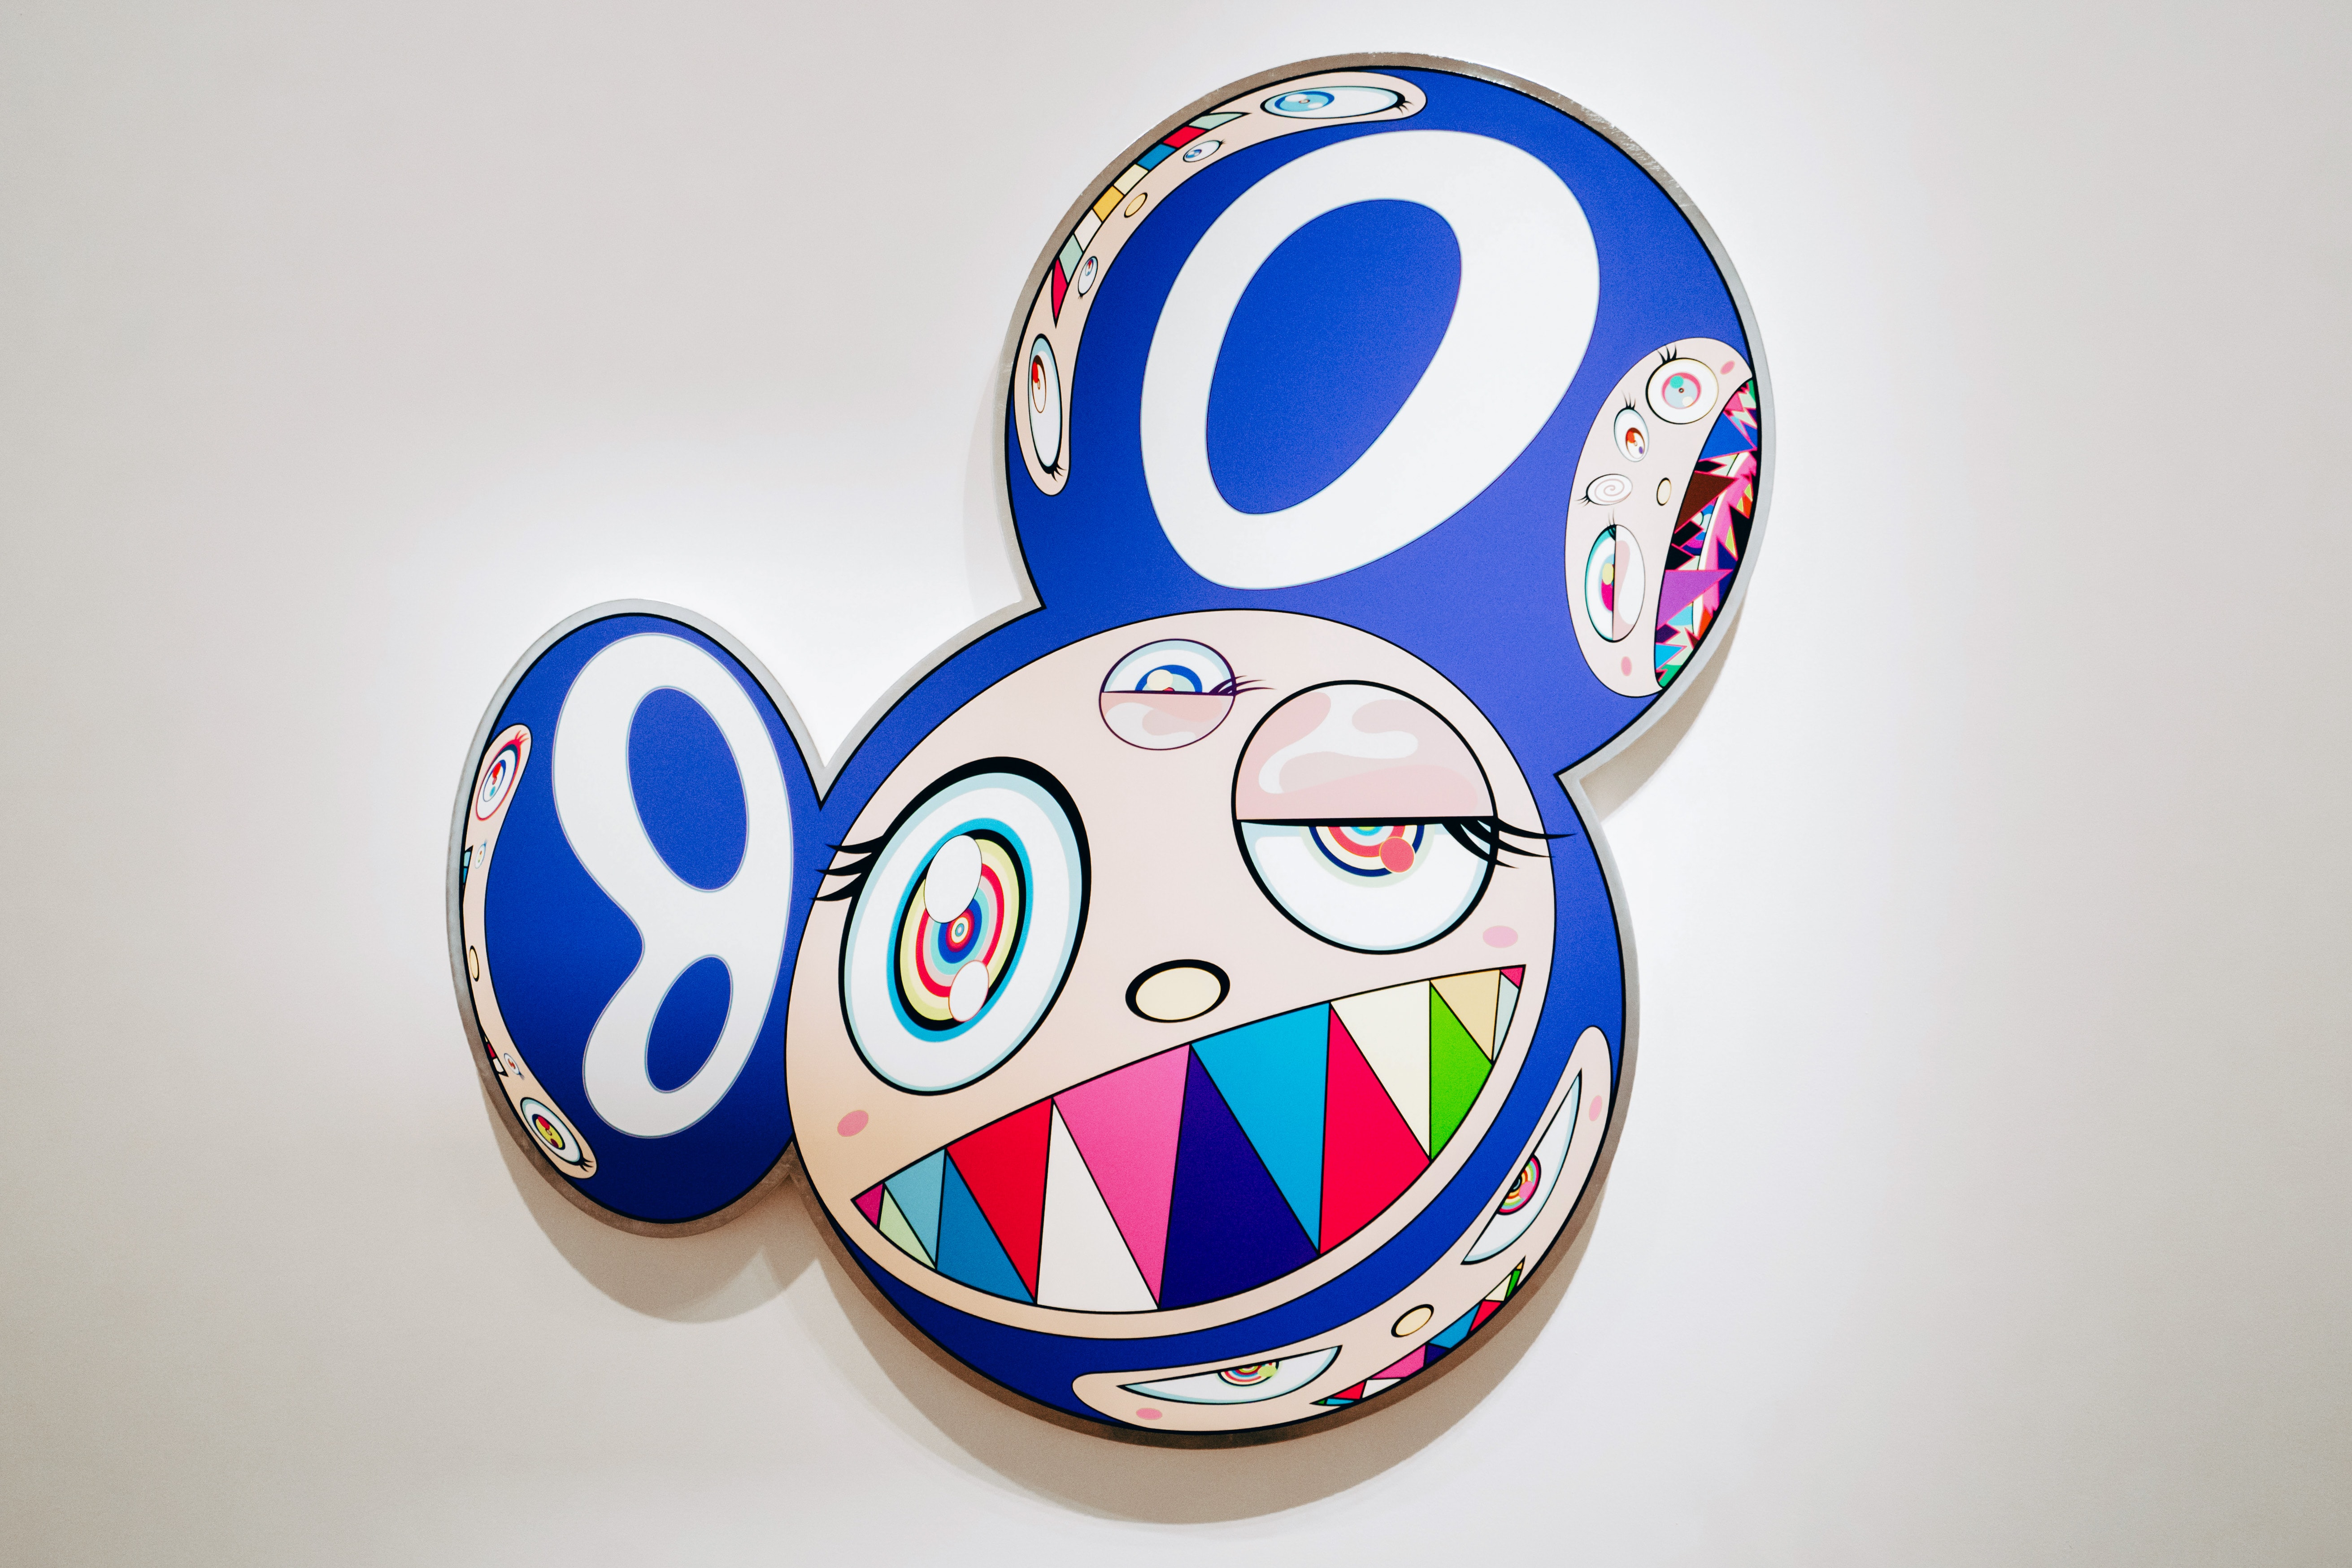 Takashi Murakami "Baka" Exhibition Galerie Perrotin Paris Mr. DOB Paintings Sculptures Devil Ko Qinghua